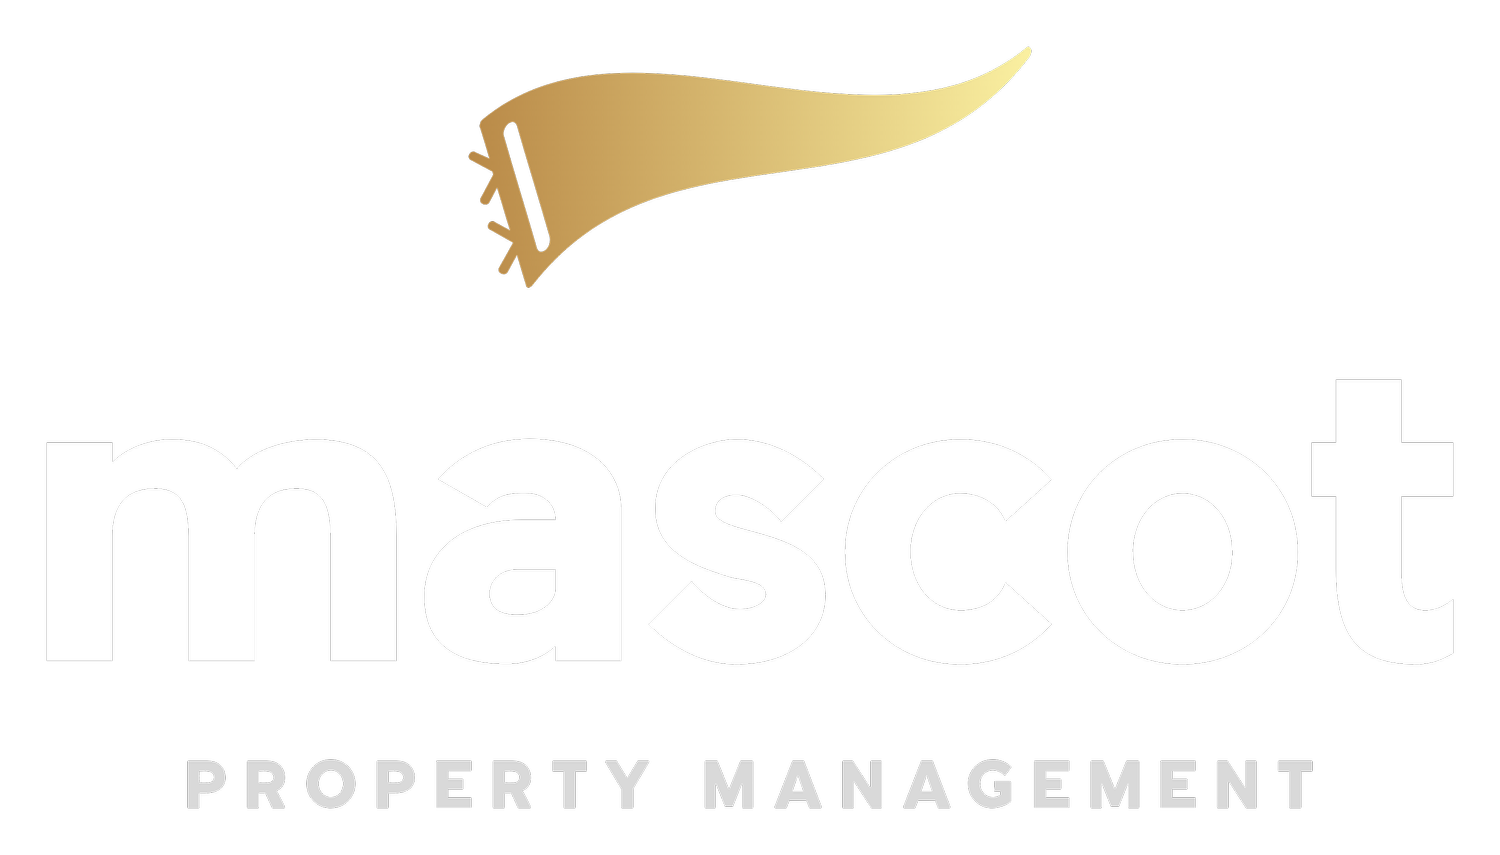 Mascot Property Management